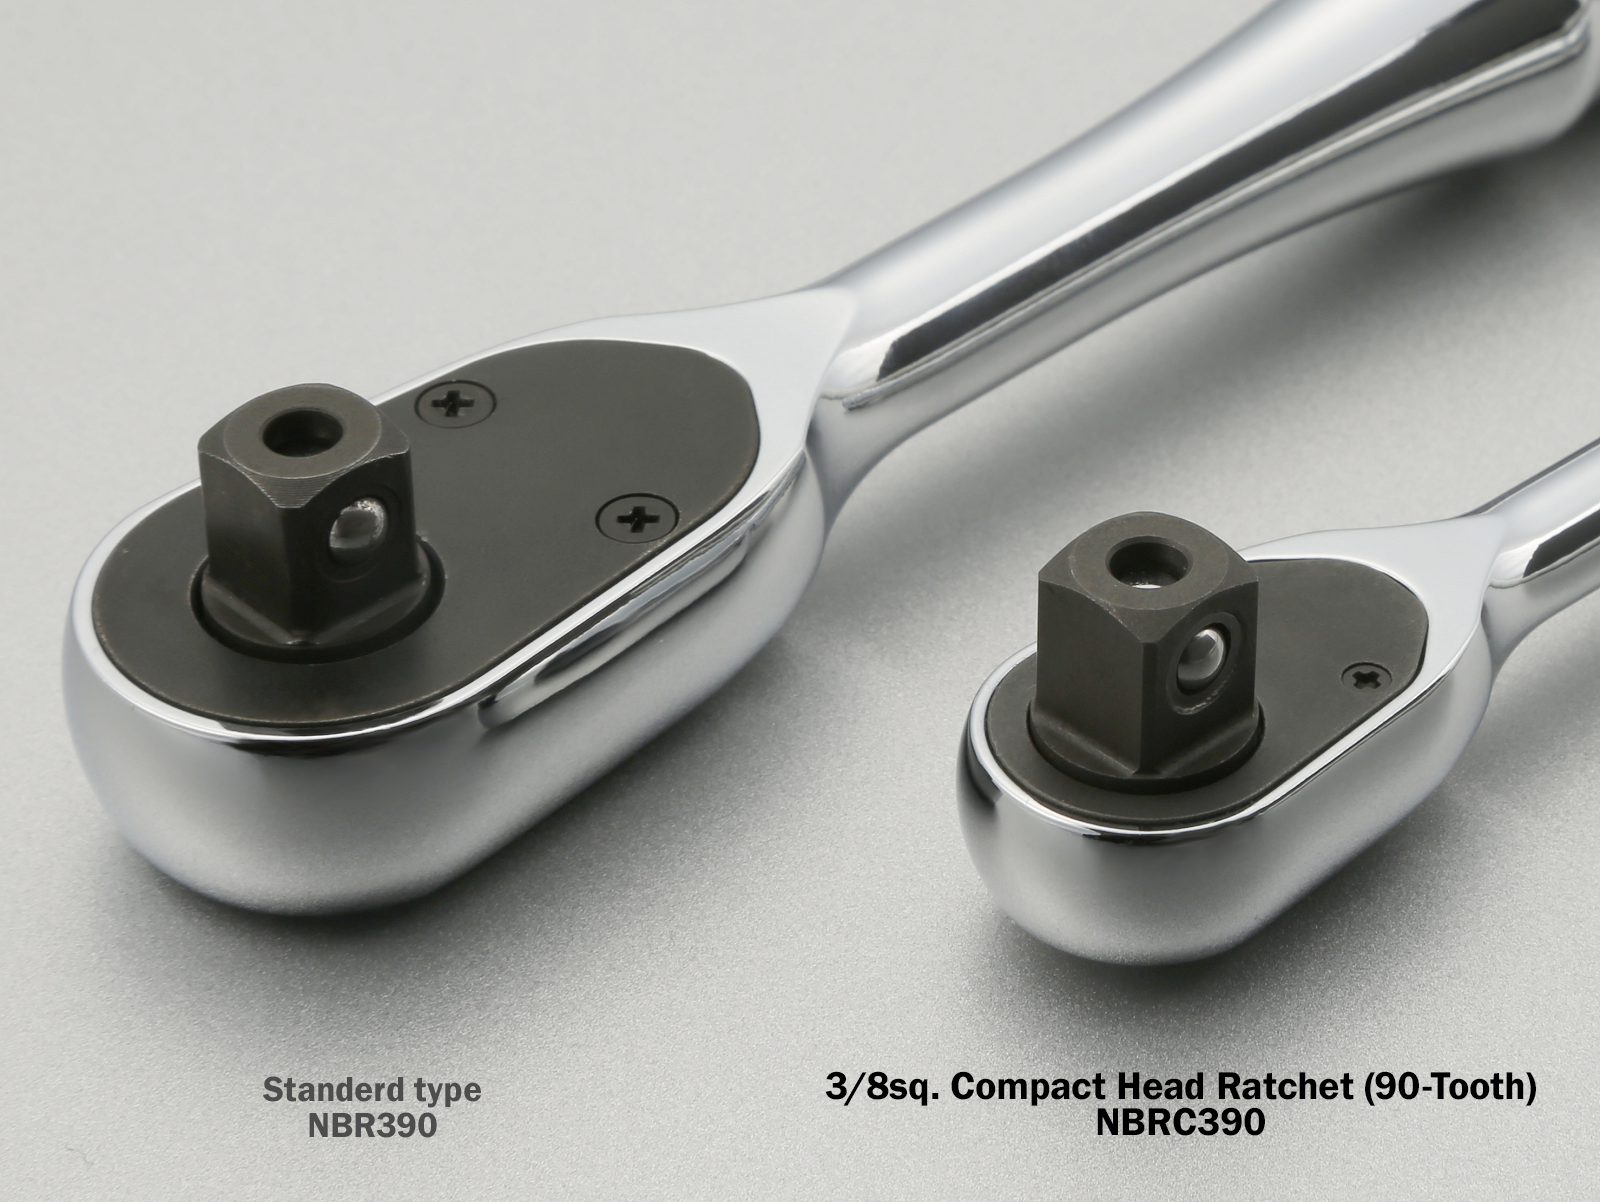 3/8sq. Compact Head Ratchet (90-Tooth)NBRC390